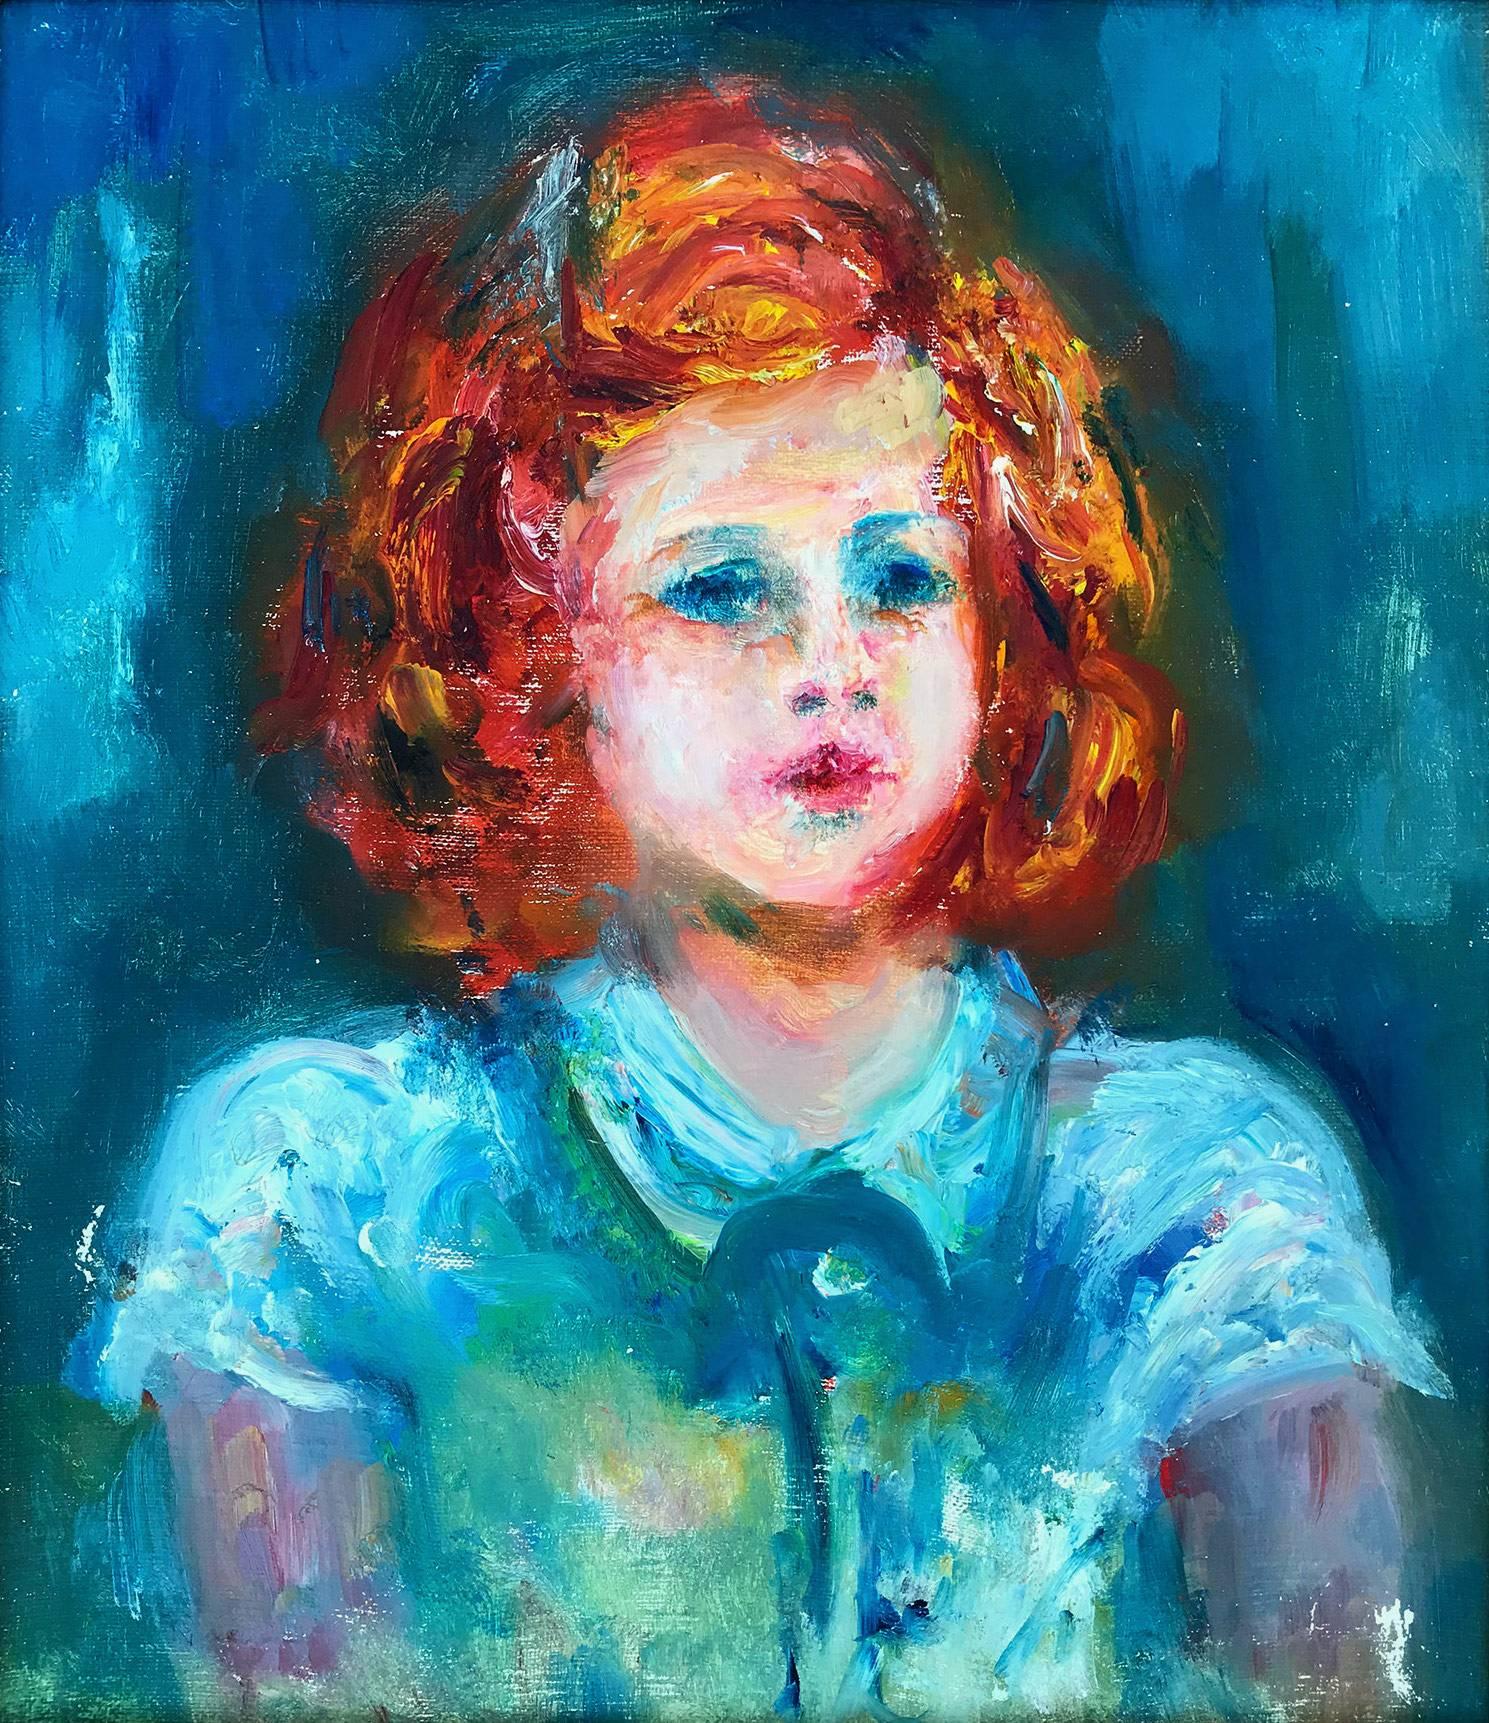 little girl in blue dress painting